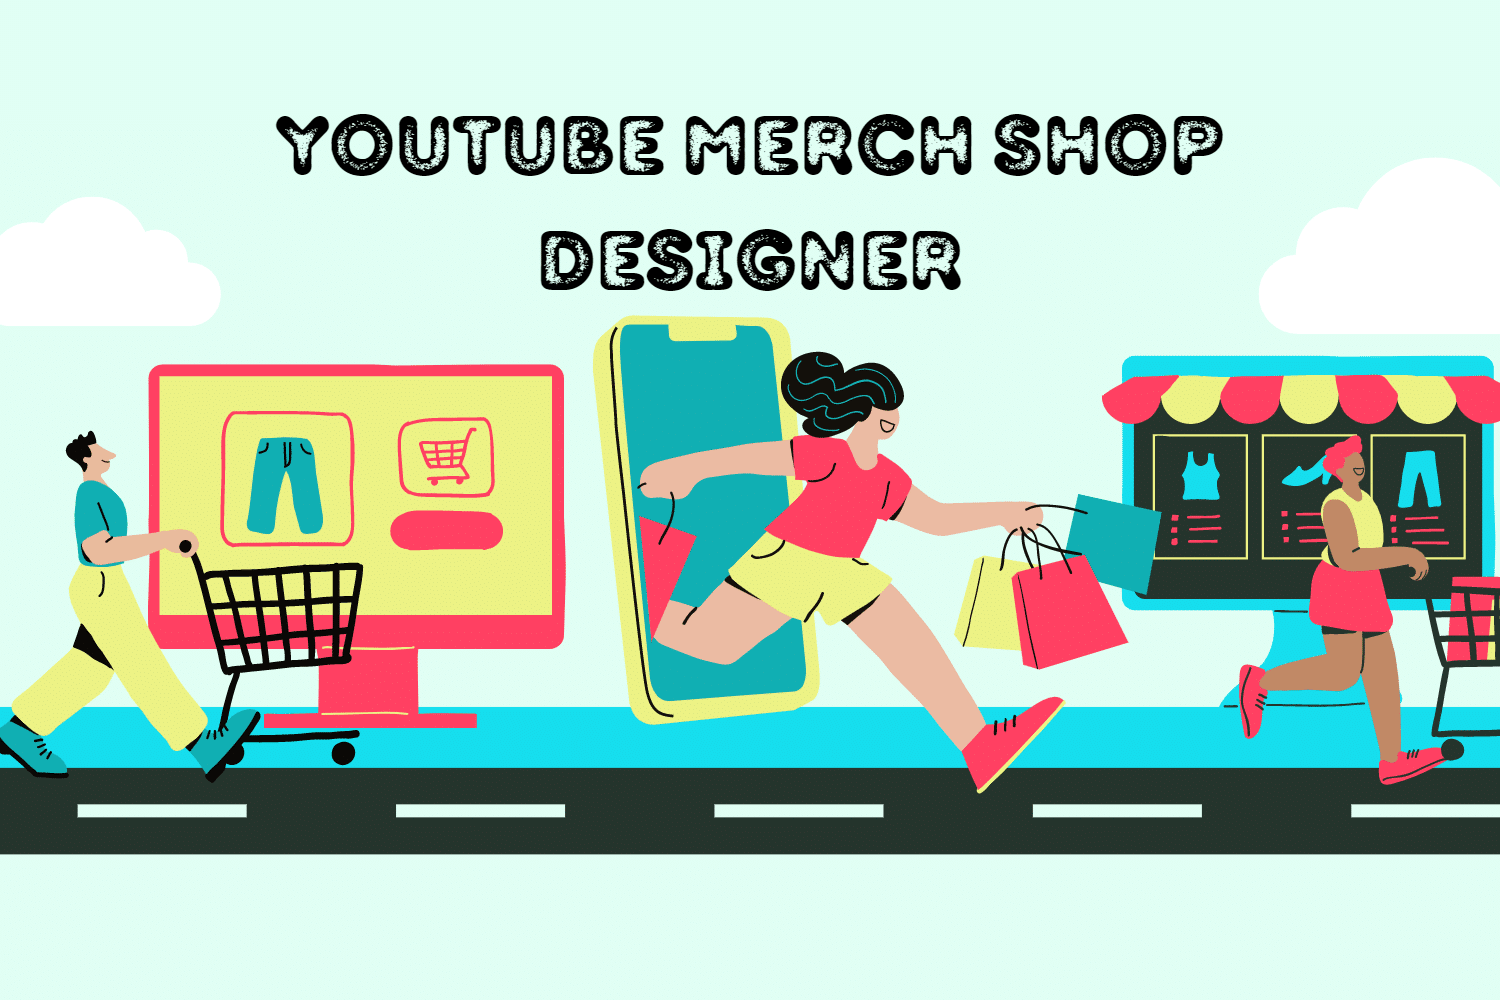 YouTube Merch Shop Designer